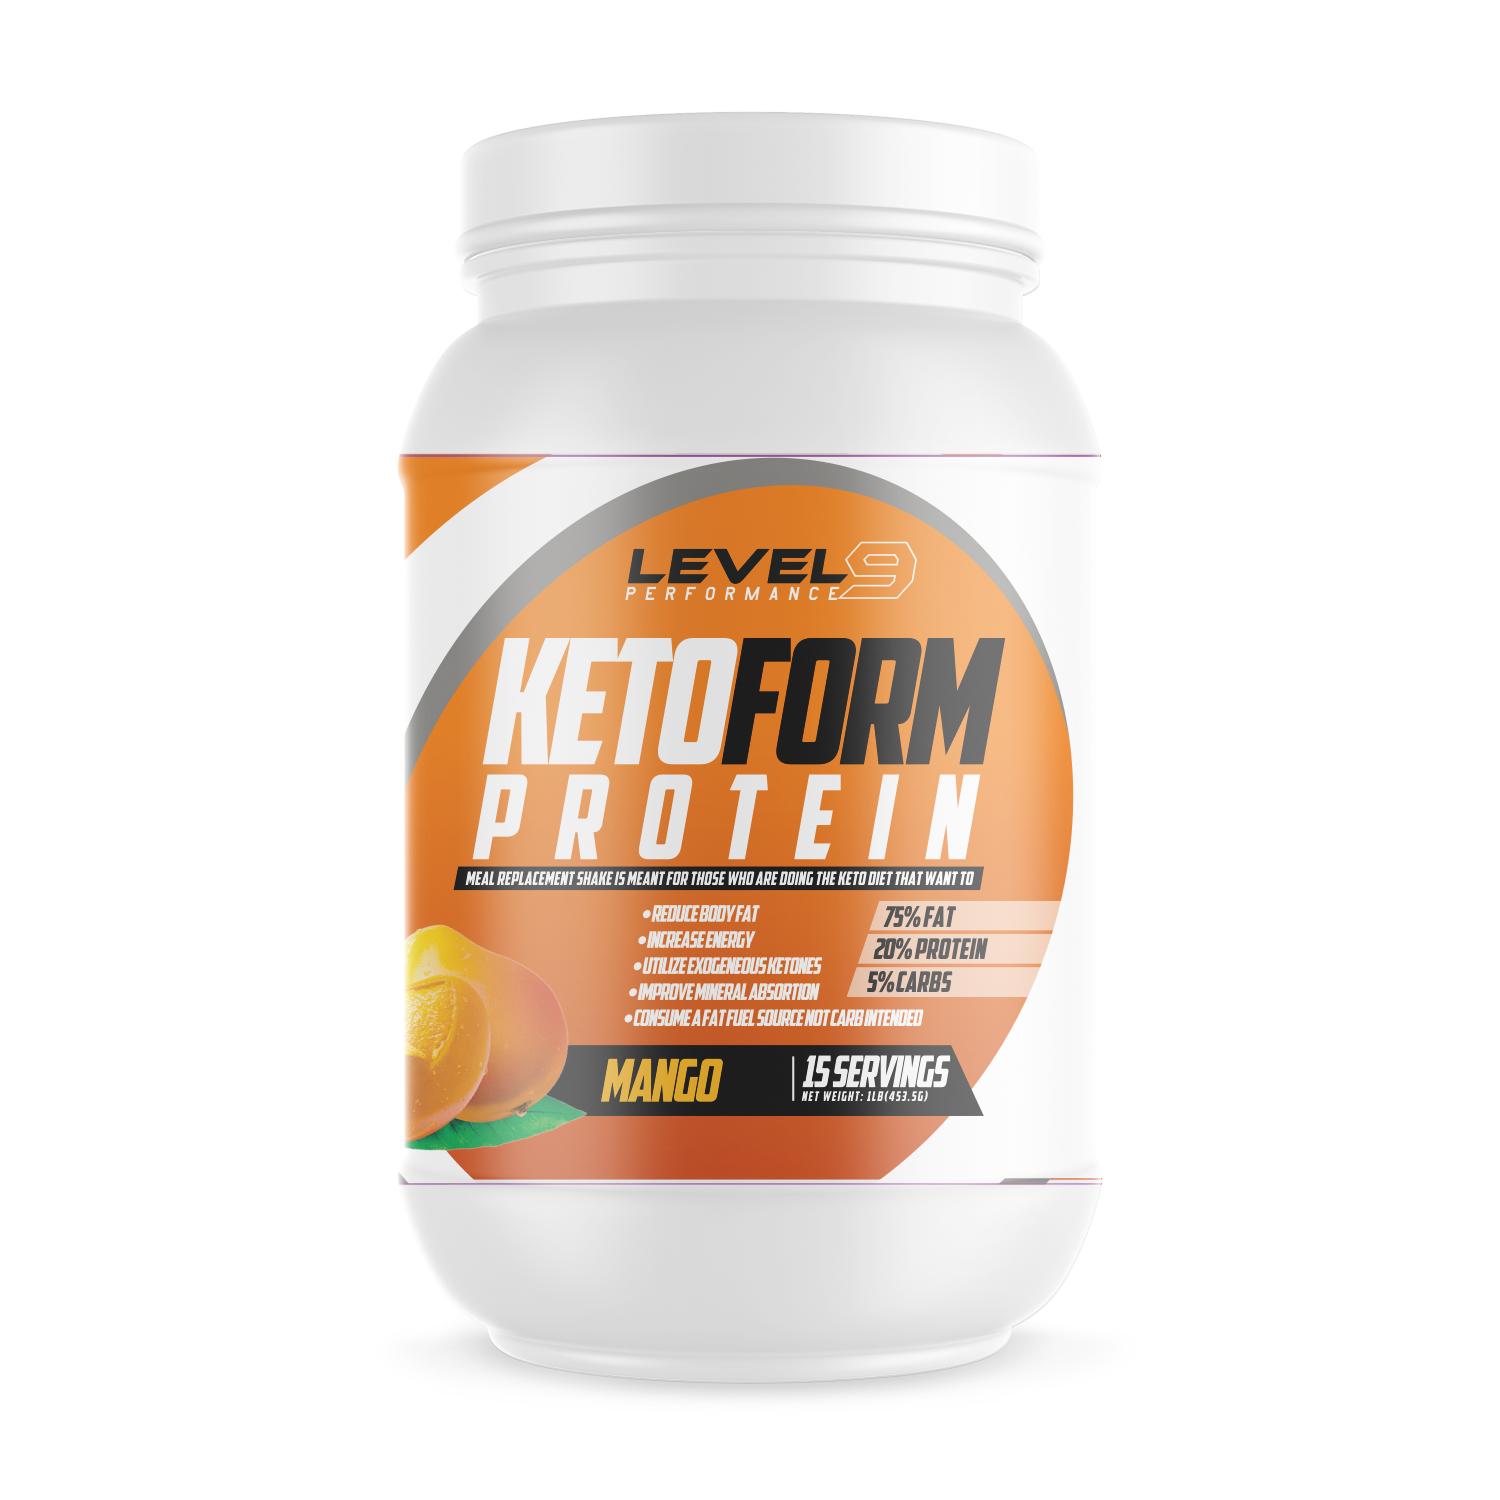 KetoForm Protein